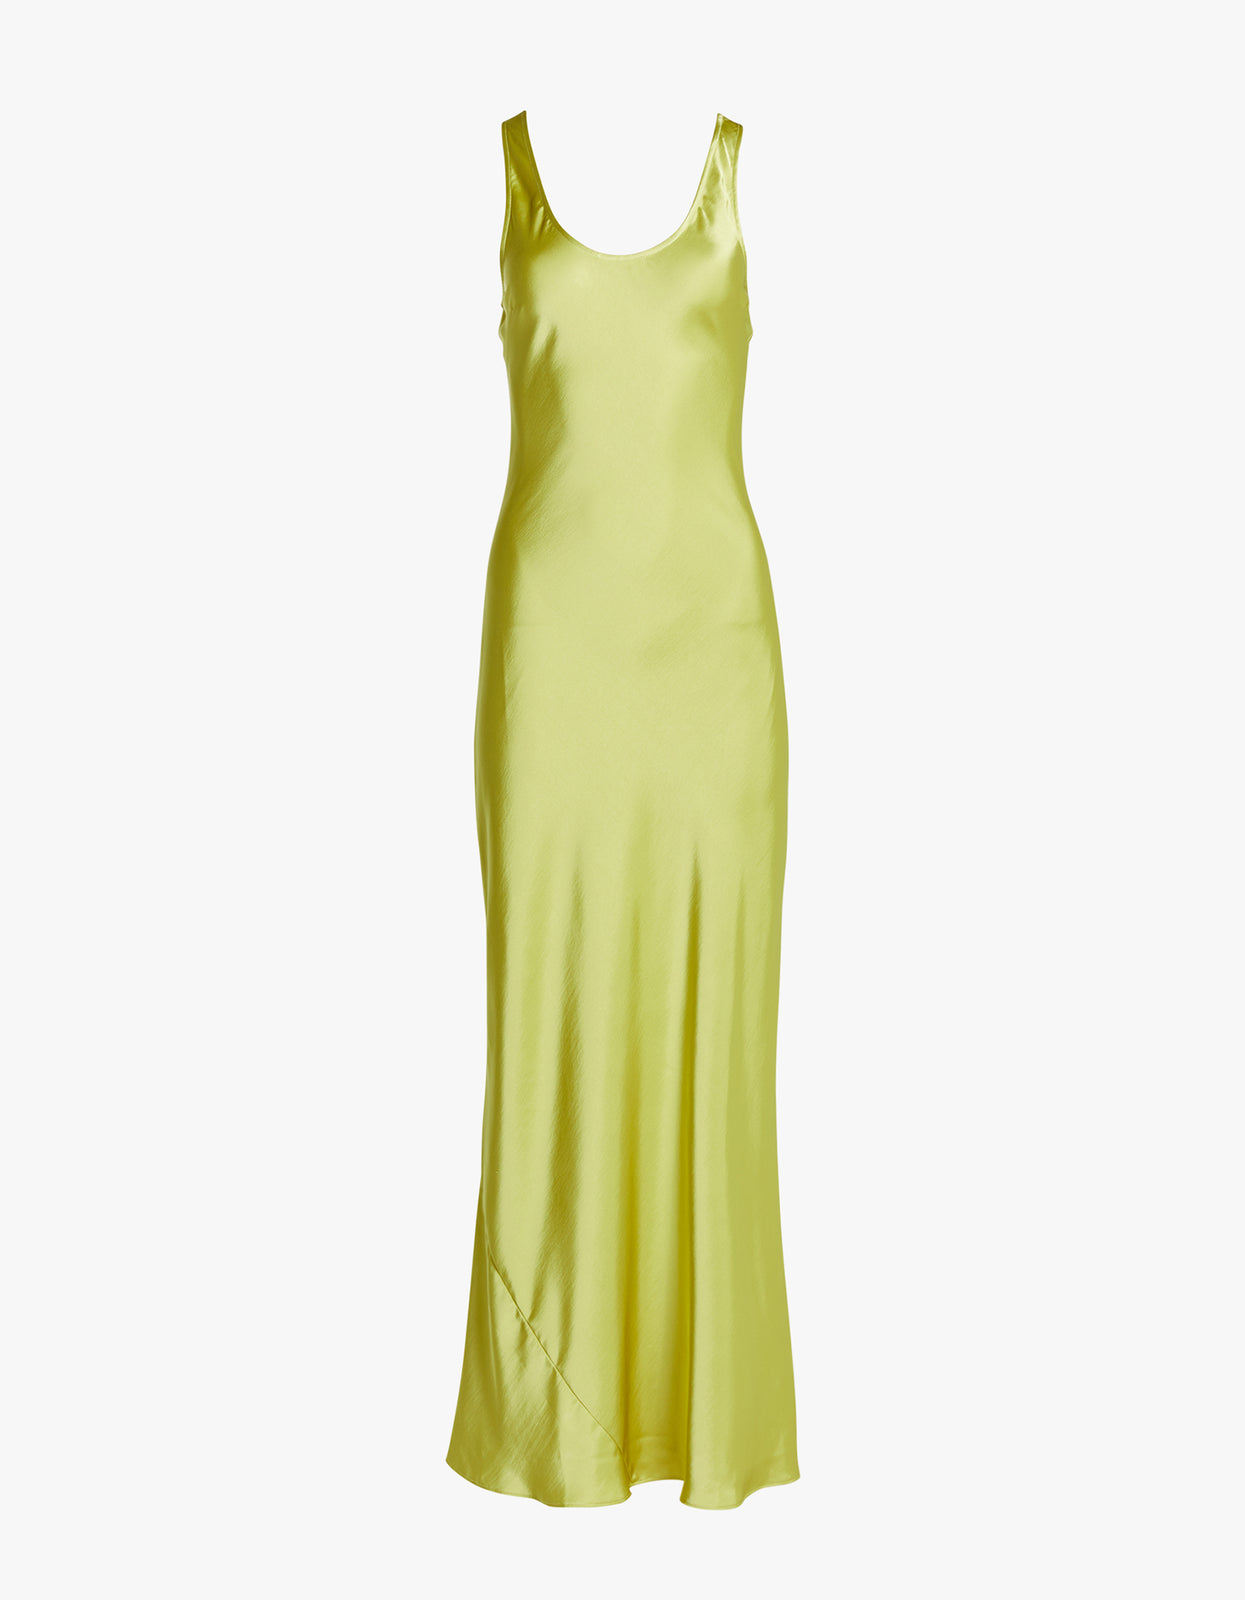 Superette | Vienna Dress - Lime